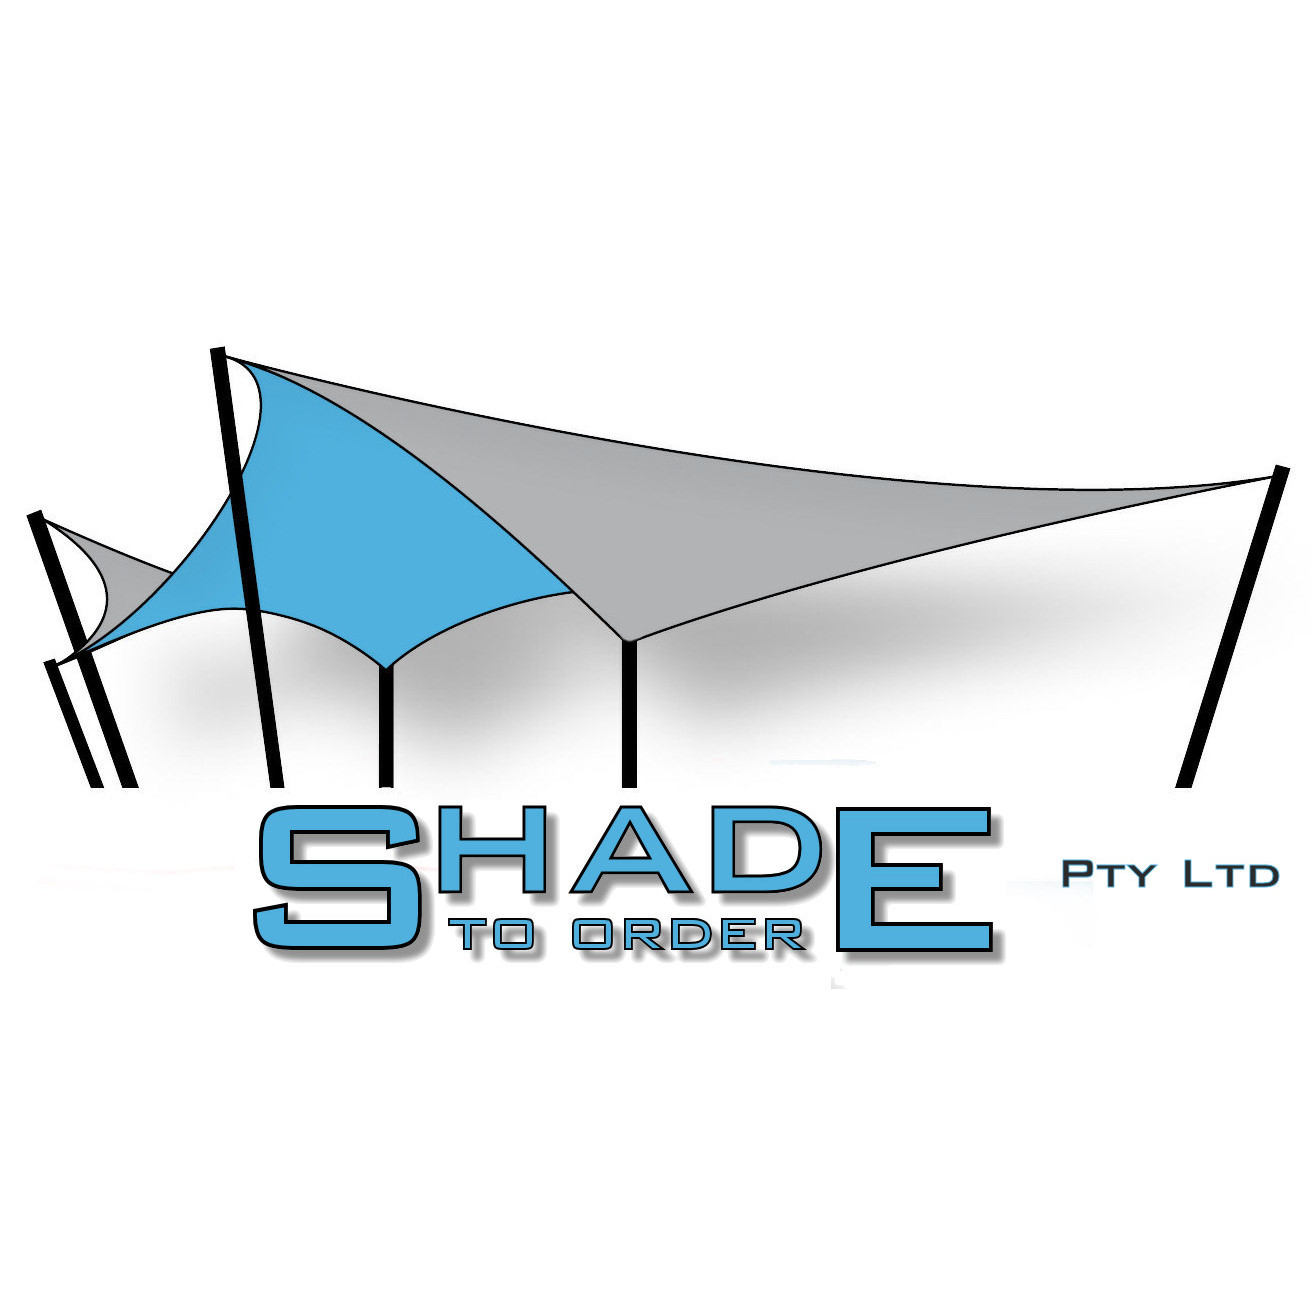 Shade To Order Pty Ltd - Gateshead, NSW 2290 - (02) 4942 5793 | ShowMeLocal.com